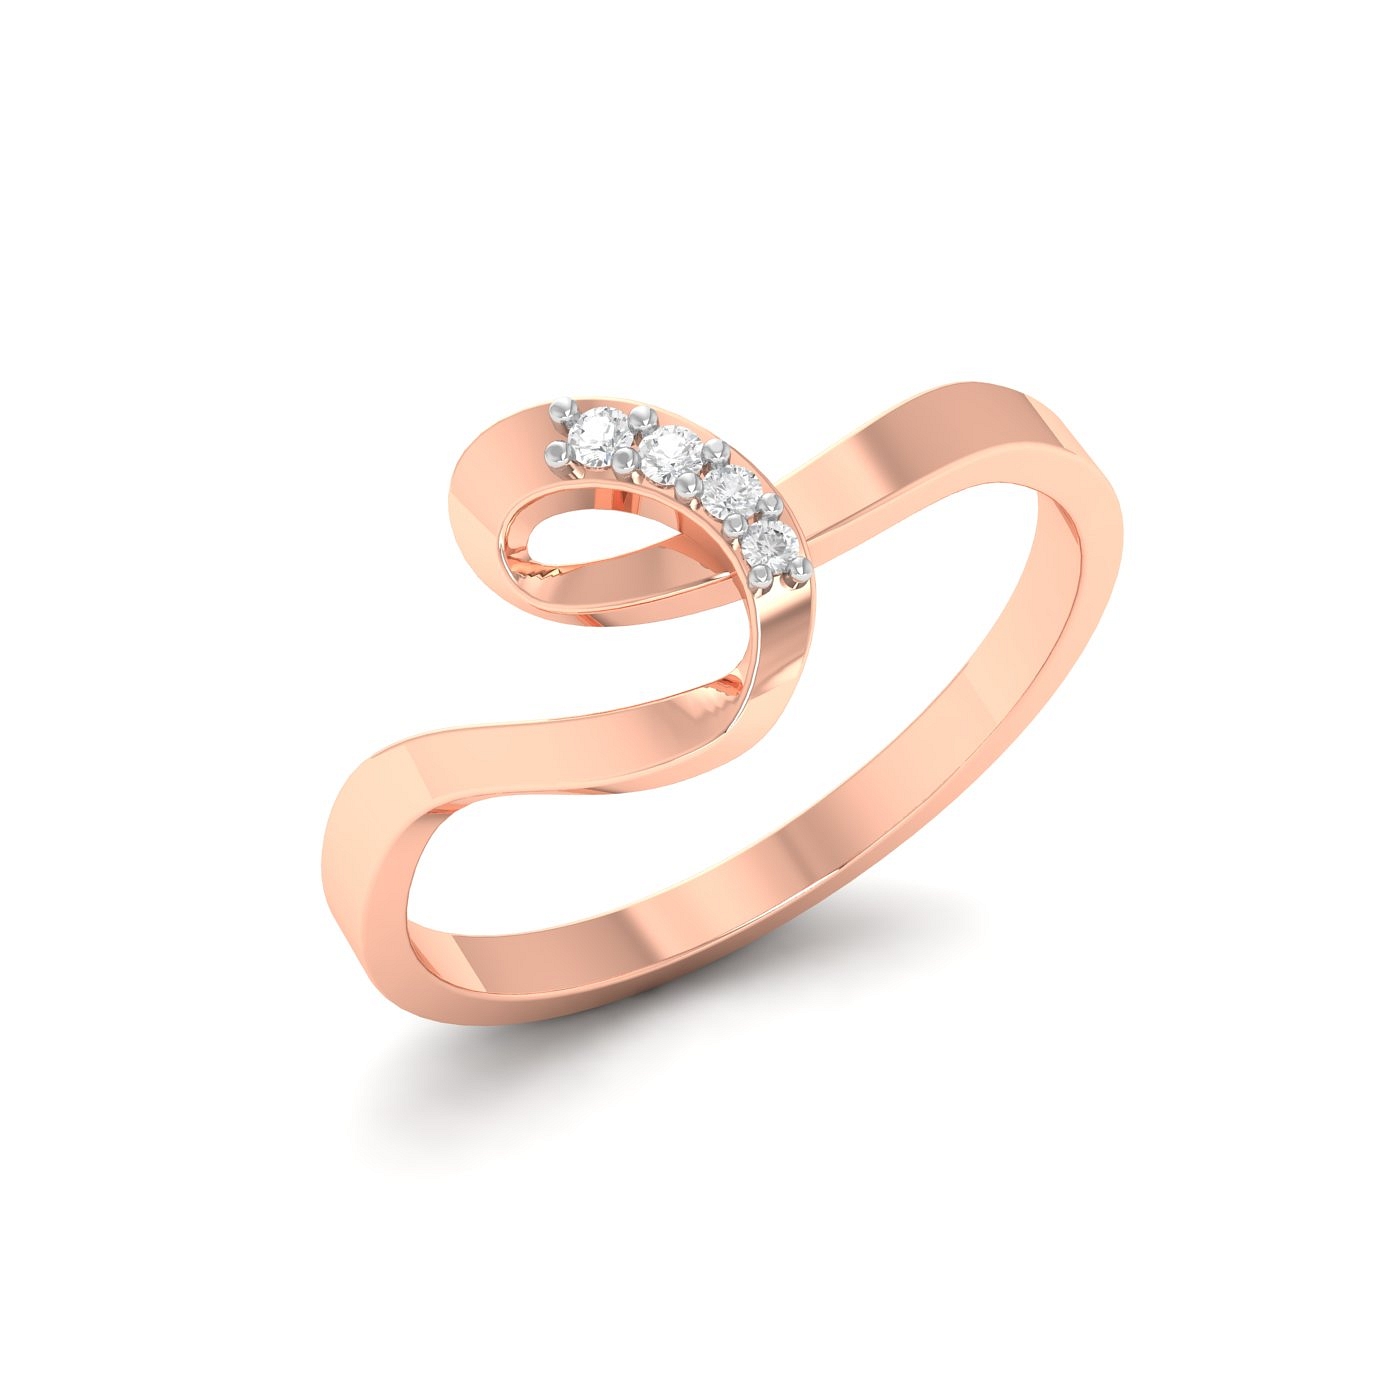  || Sina Daily Wear Diamond Band || Top 10 Best Diamond Rings For Women under 20000 ||